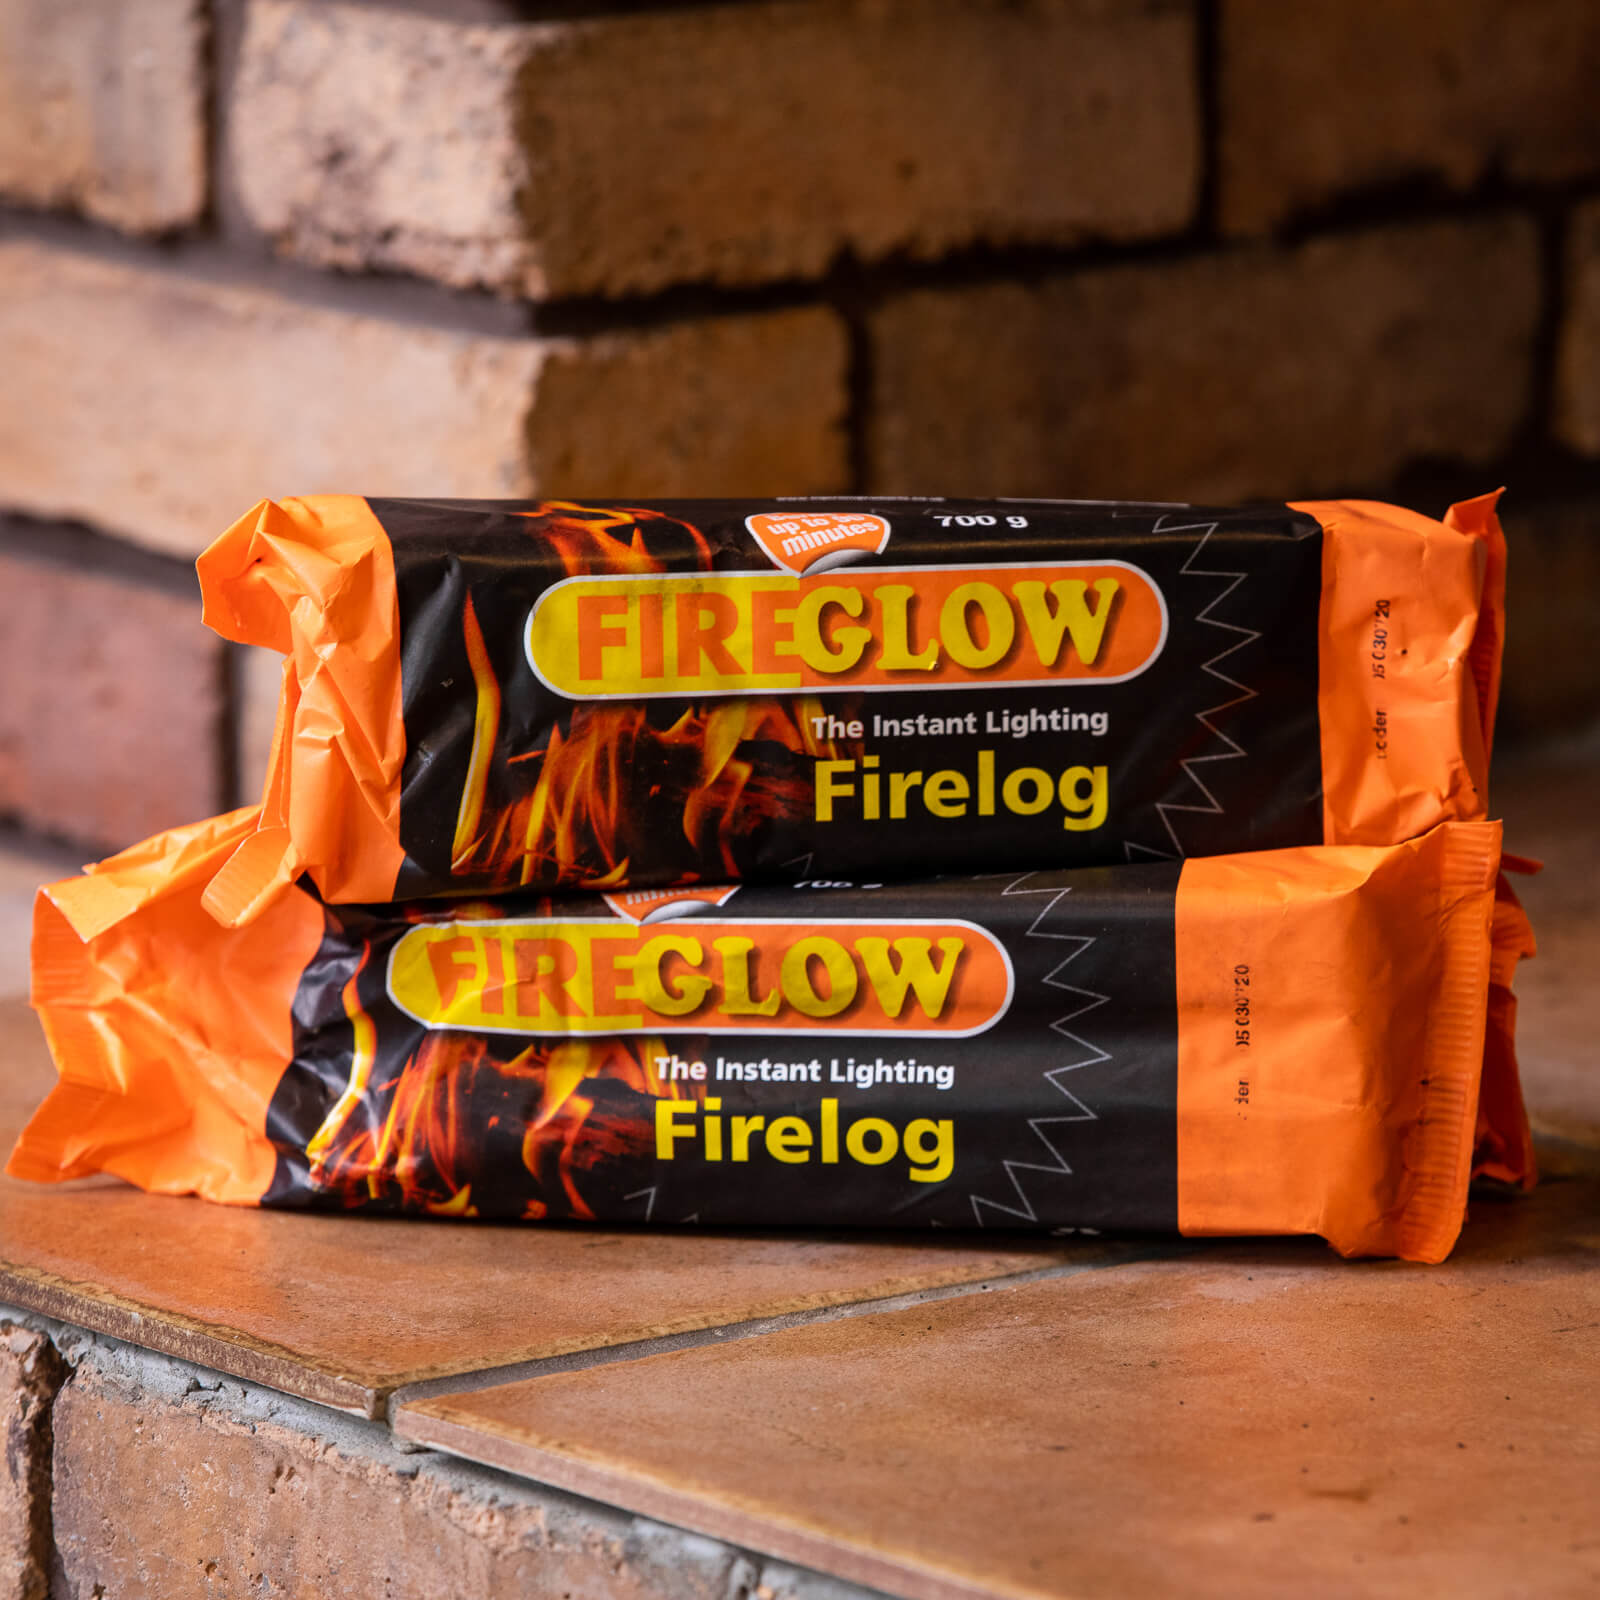 1 box of 15 fireglow firelogs